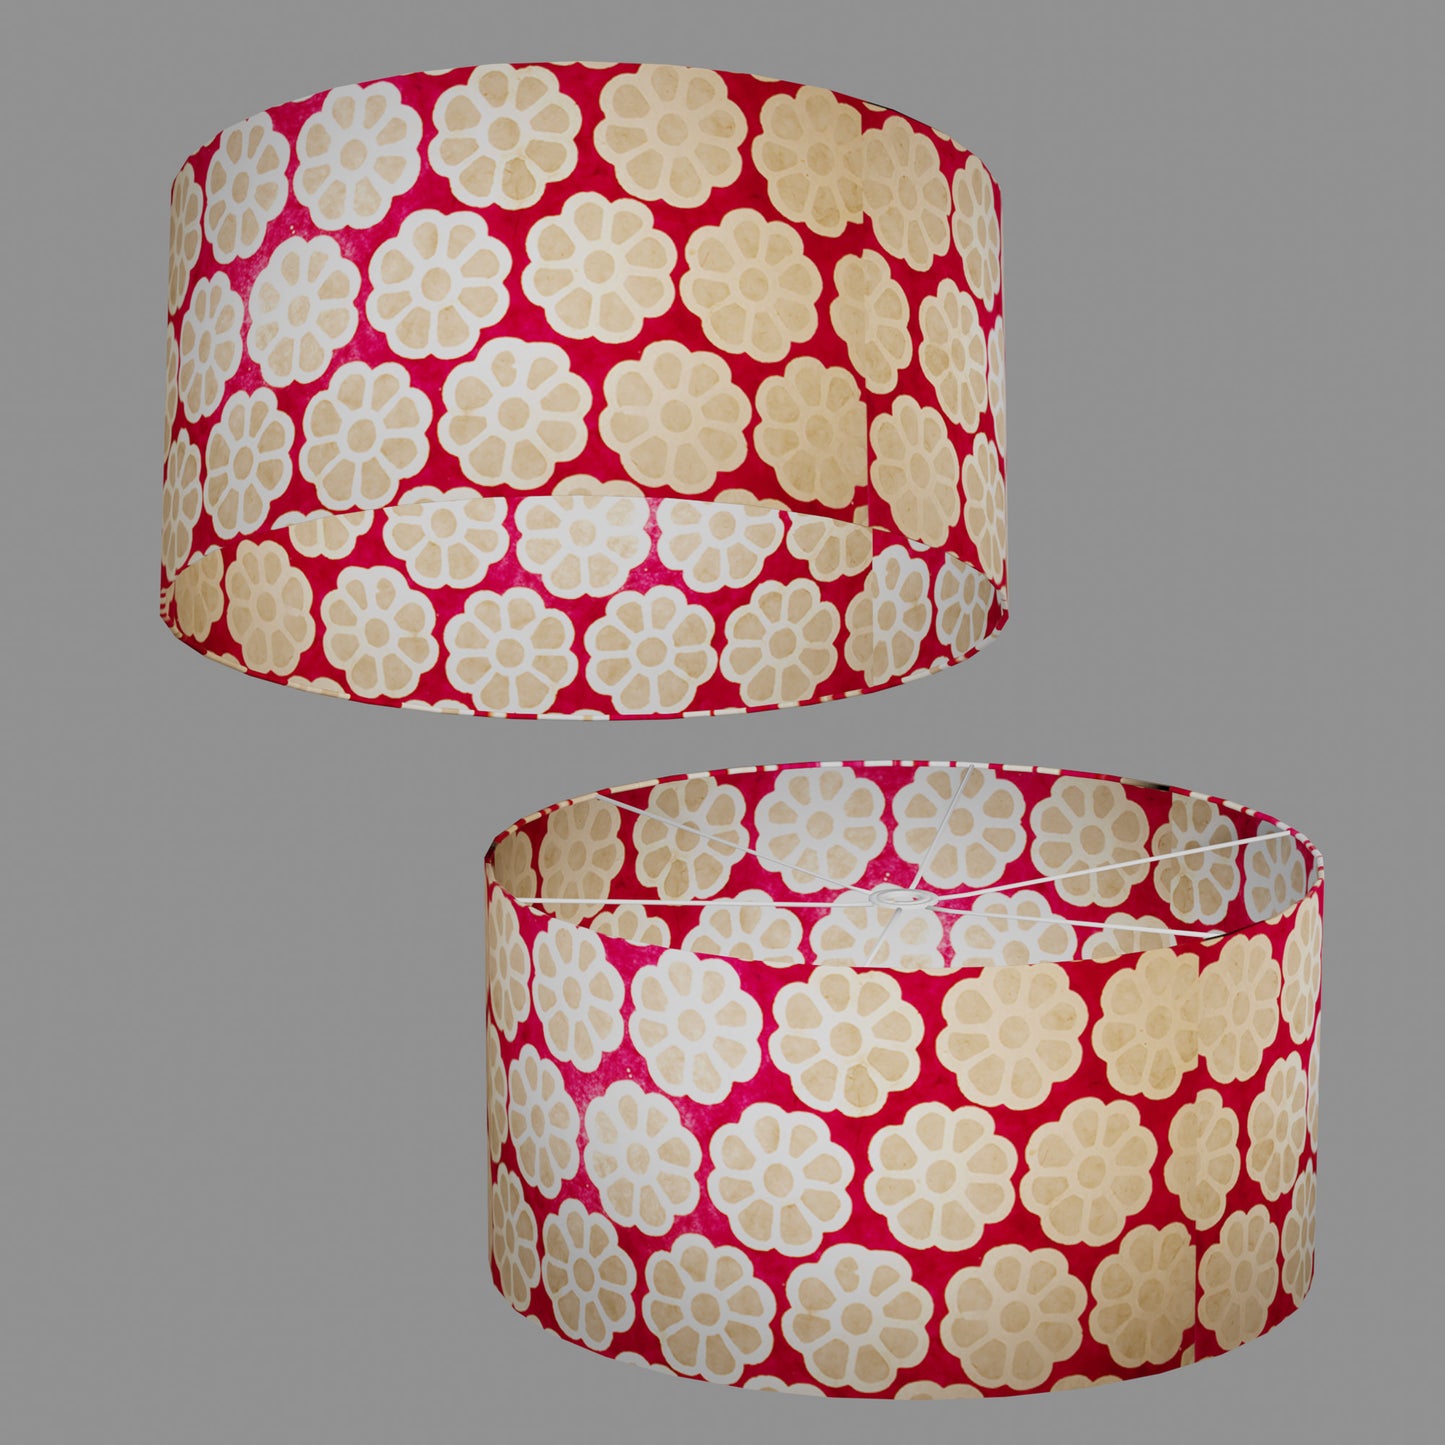 Drum Lamp Shade - P22 - Batik Big Flower on Hot Pink, 60cm(d) x 30cm(h)